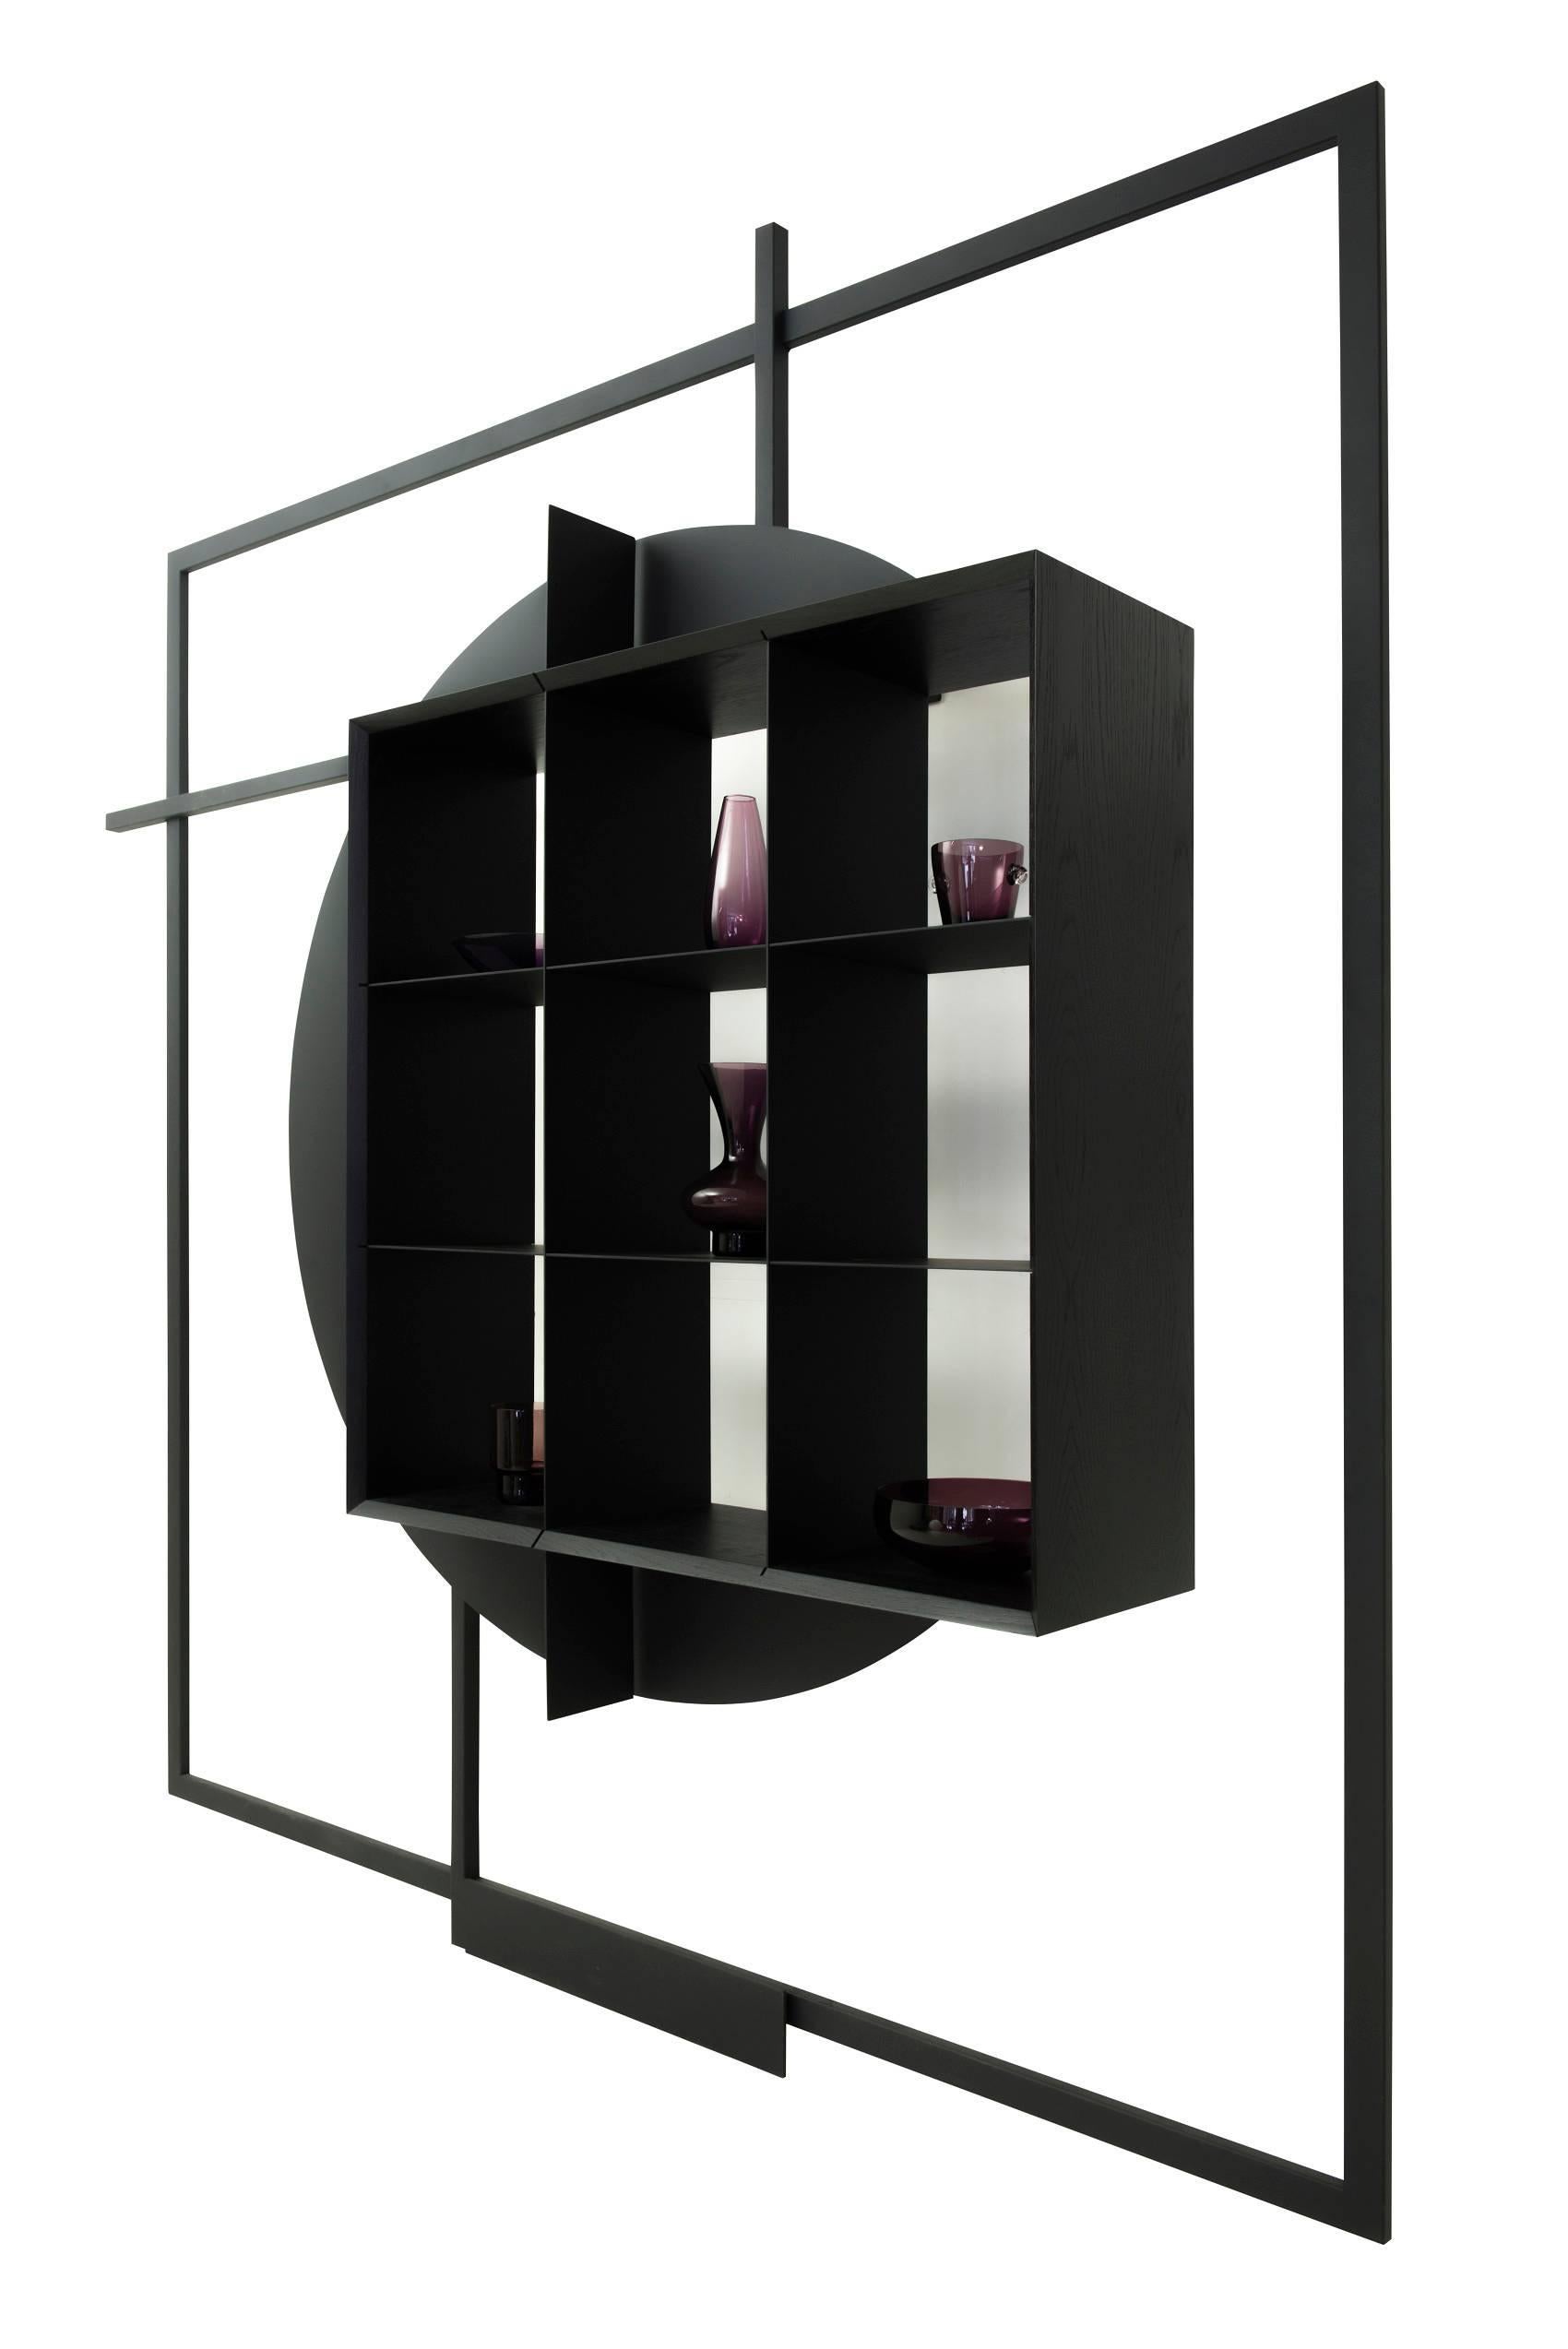 Modern Black Metal  Shelf Object COM:POS:ITION 2.C Contemporary Handcrafted Design For Sale